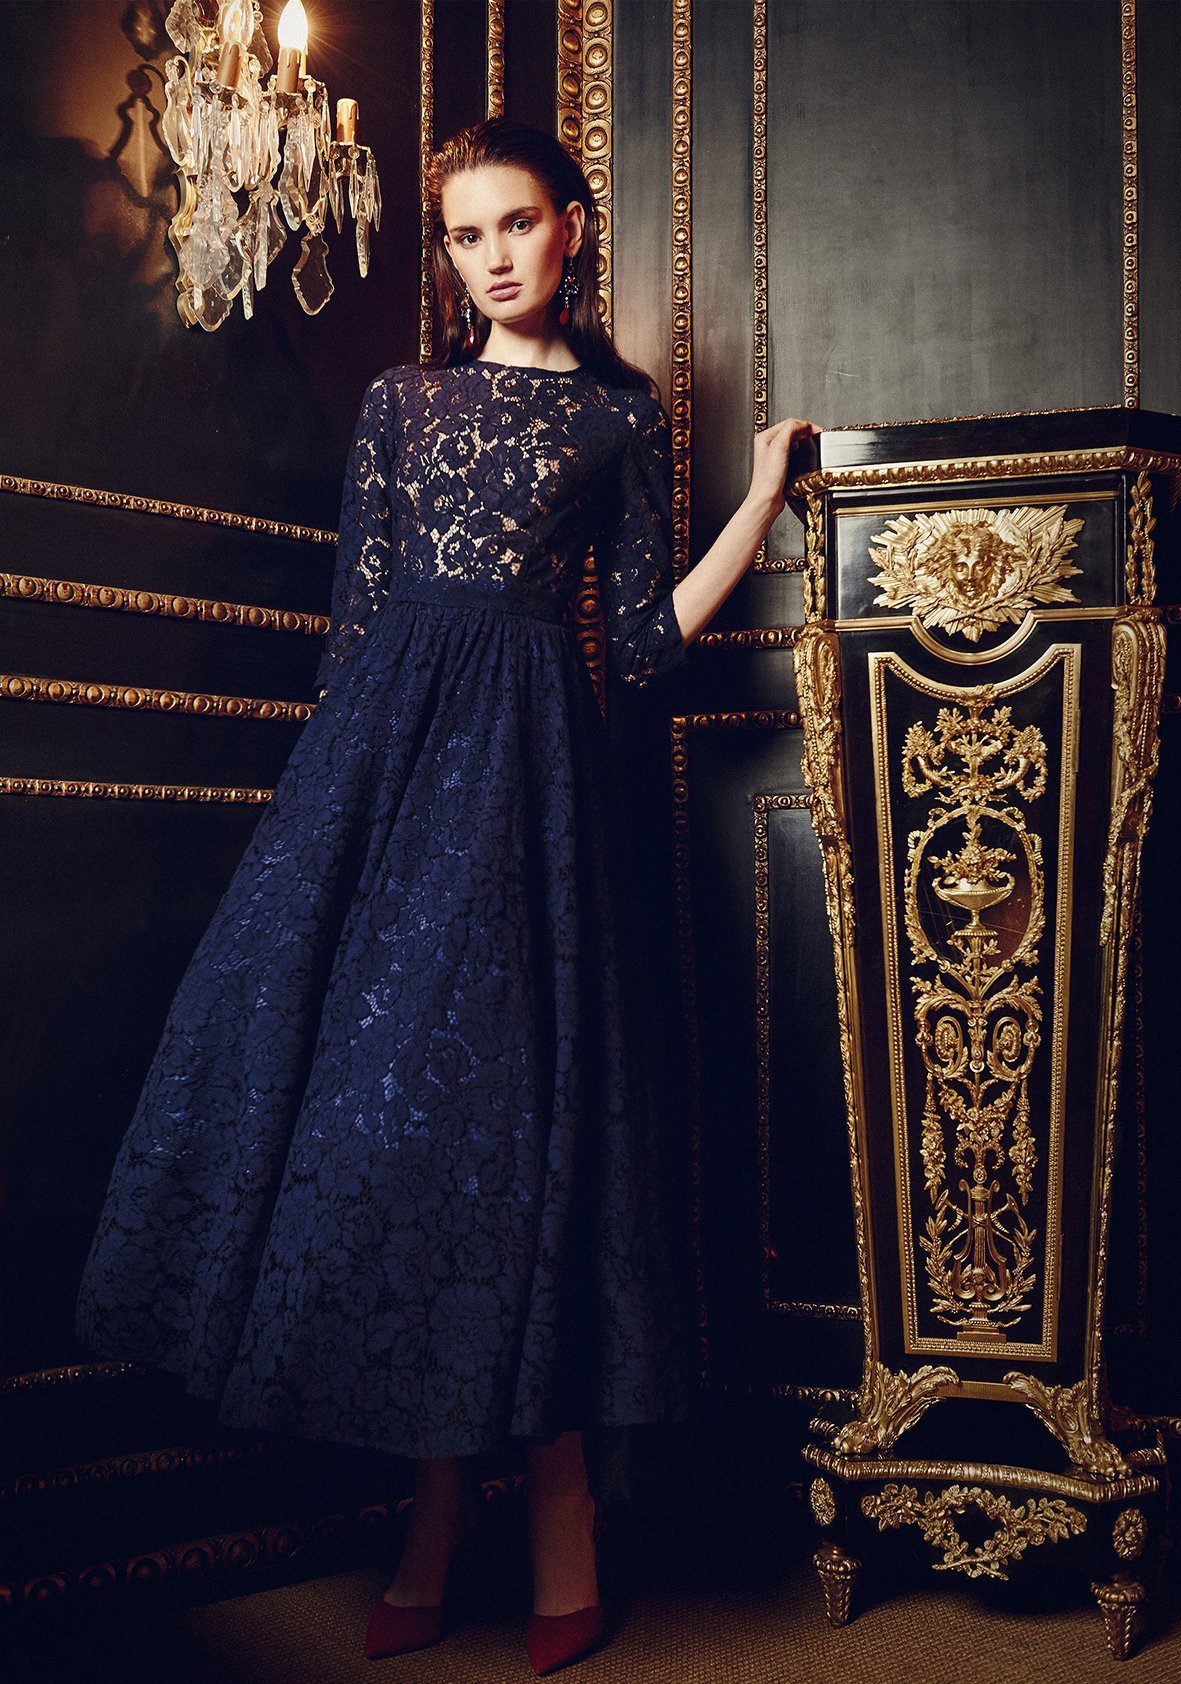 Lace dress "Vicktoria" Blue - The Clothing Lounge MATSOUR'I